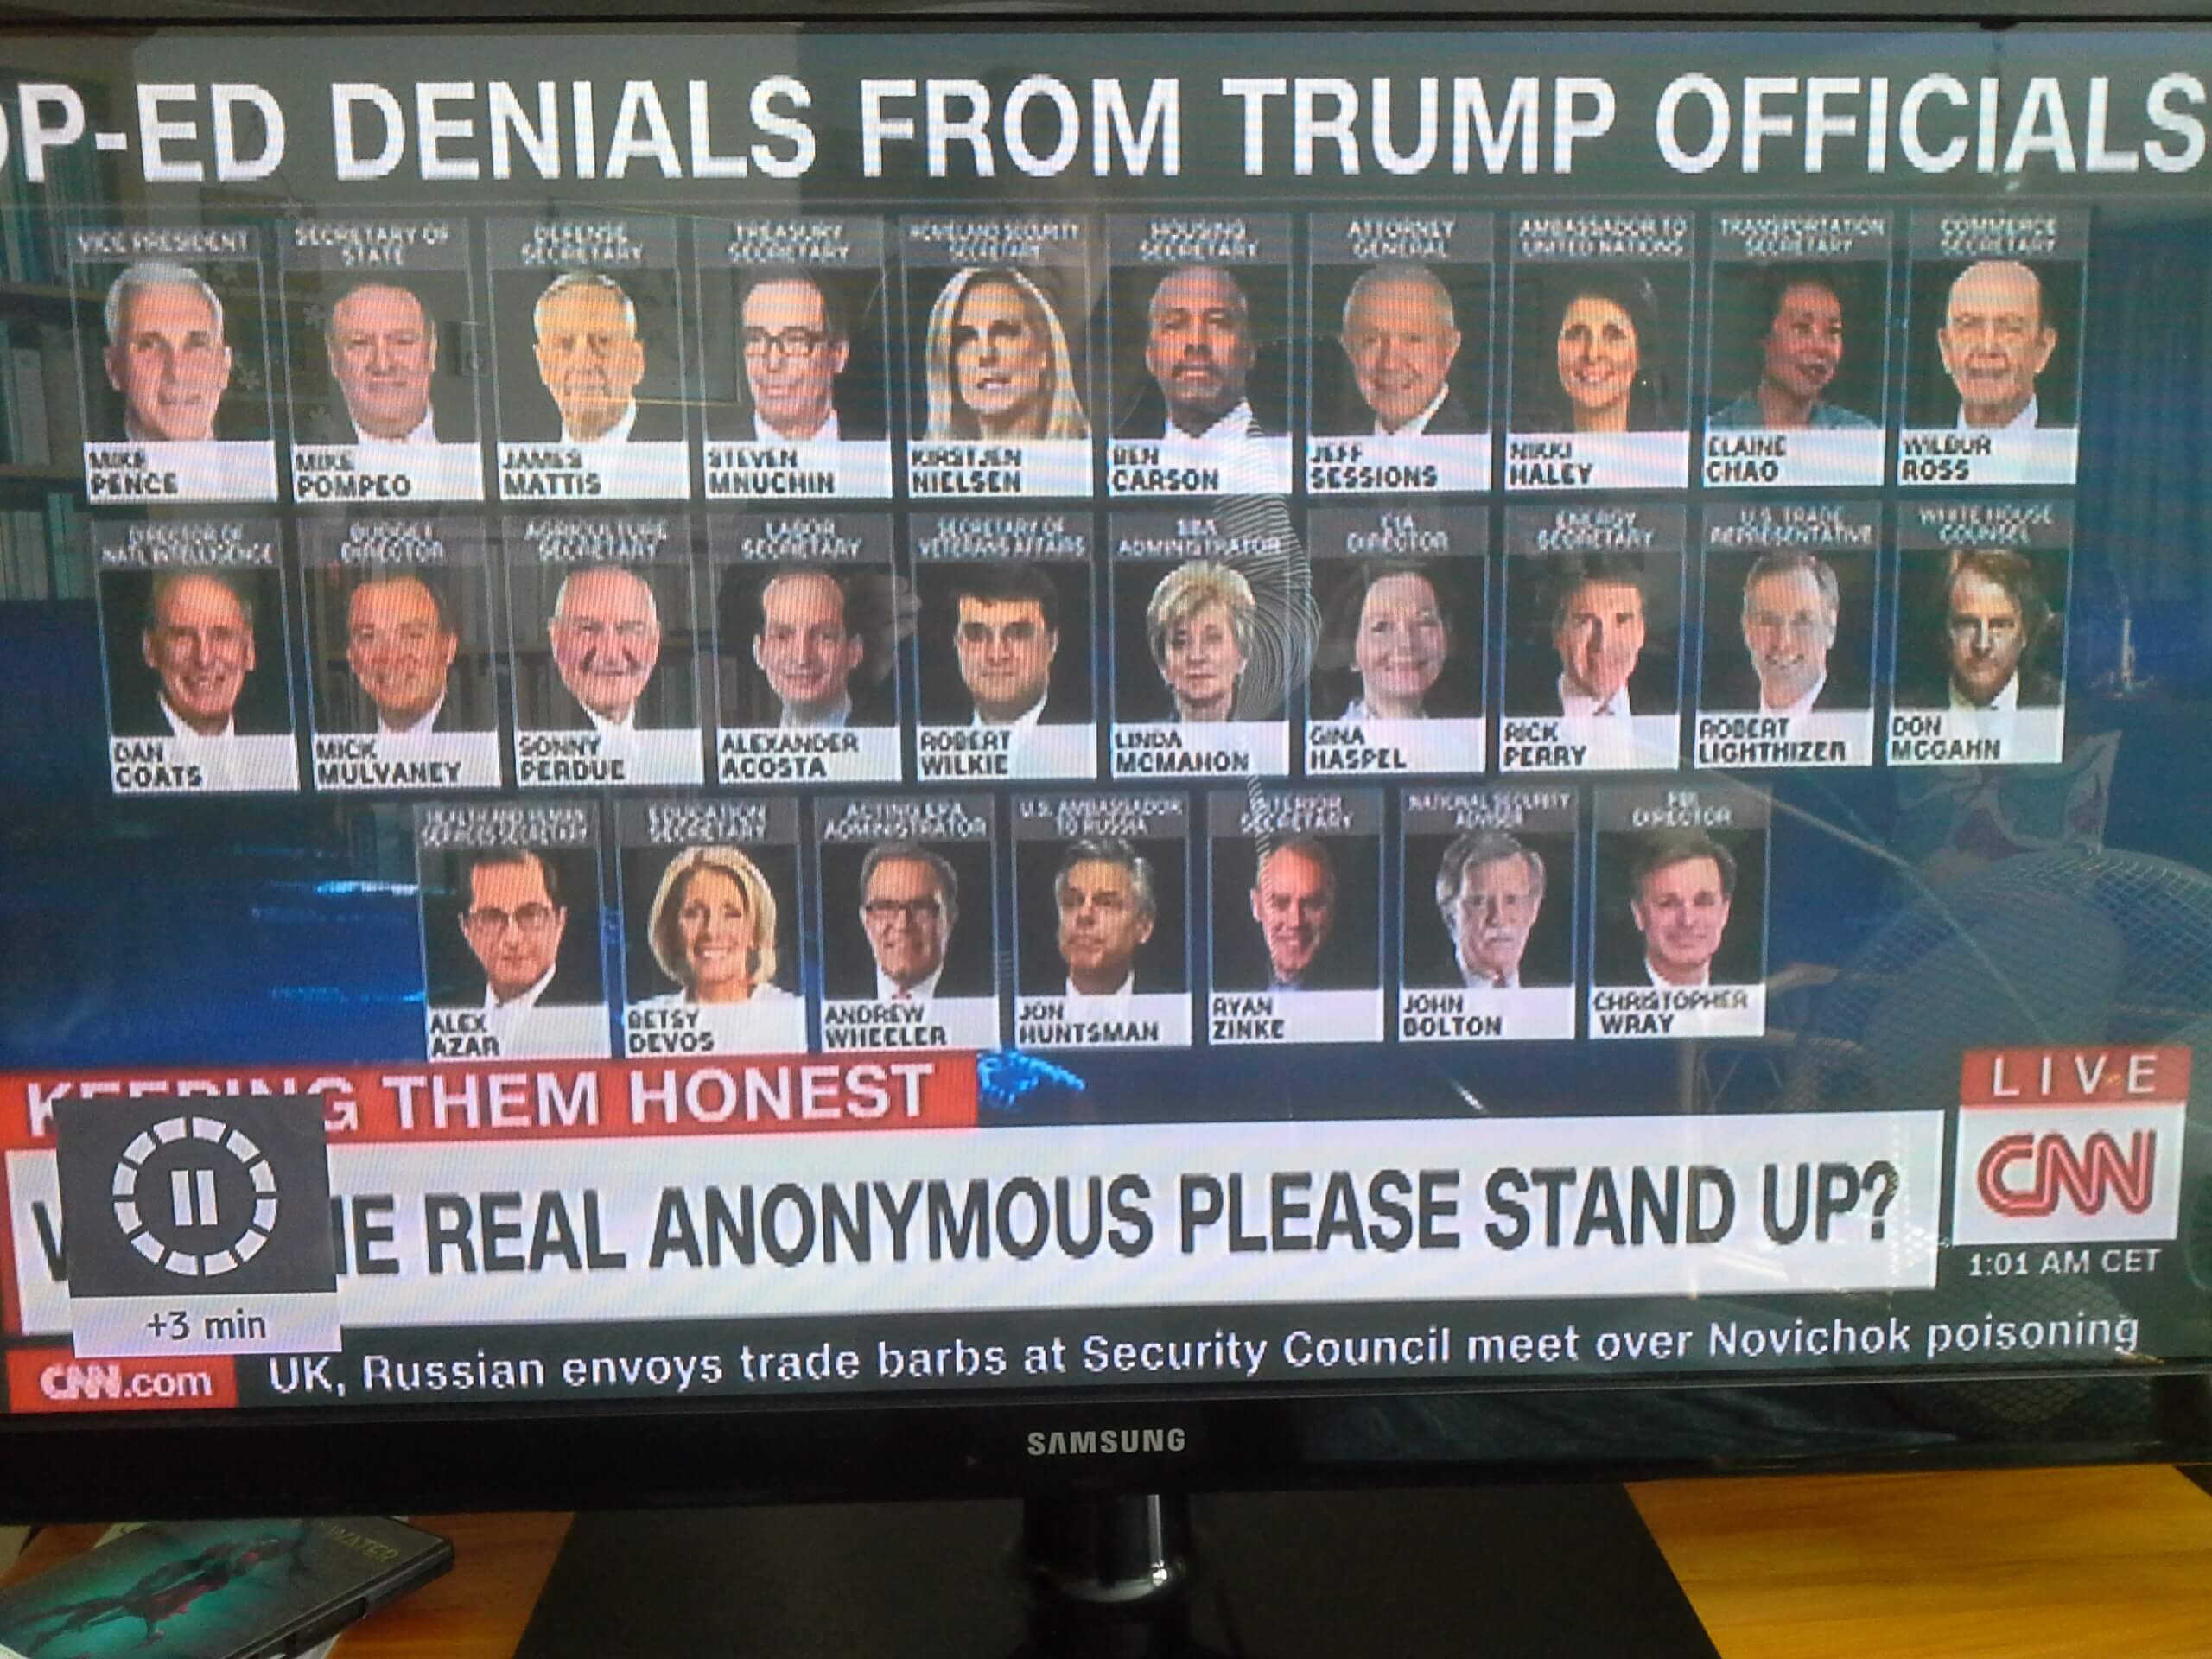 Pics of 27 Trump Officials who have given denials to CNN.